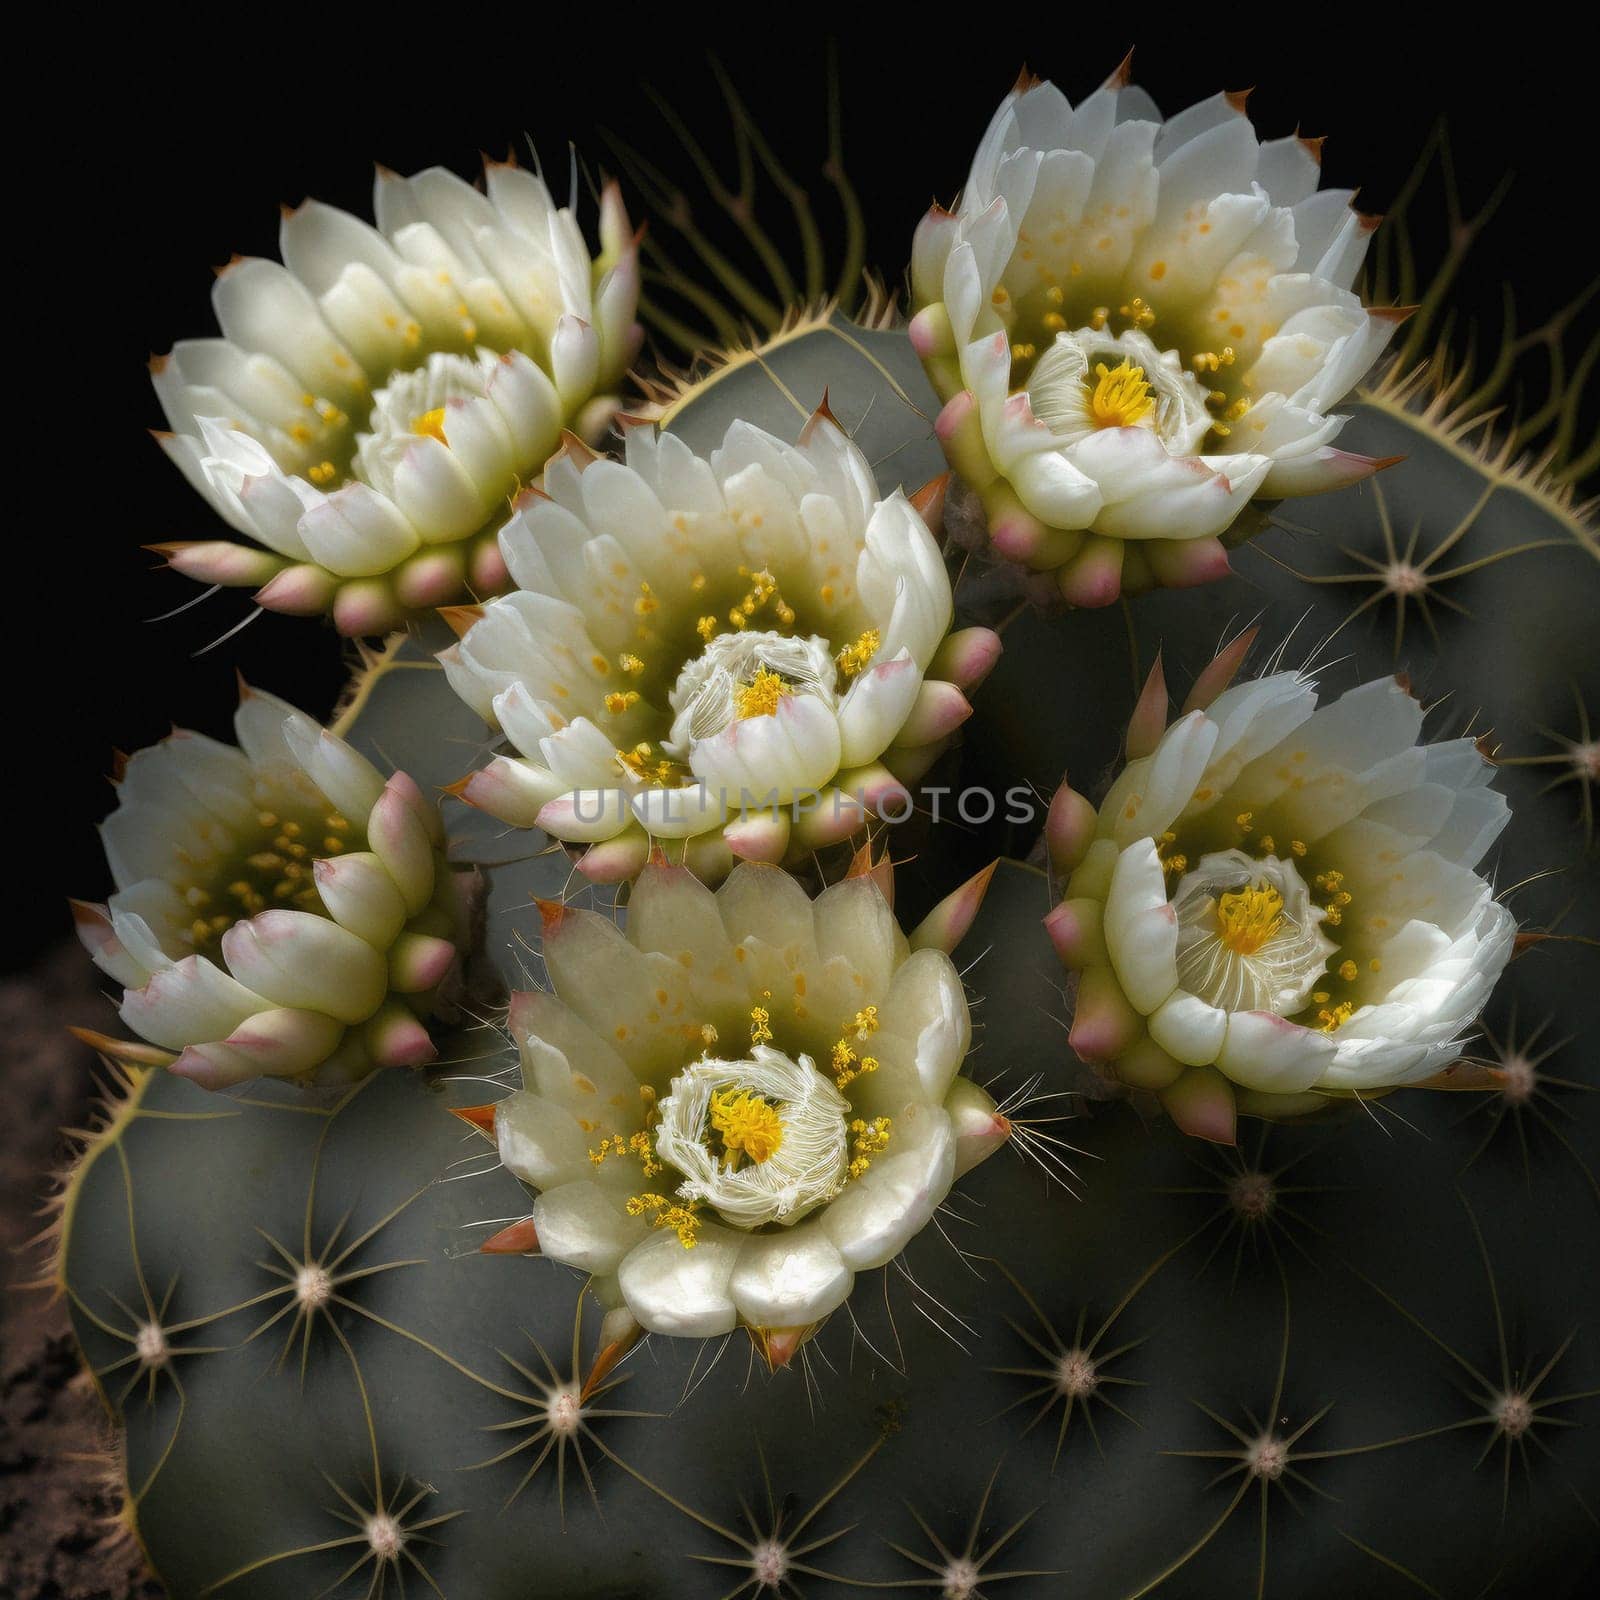 Gymnocalycium gibbosum cactus, blooming with opened flowers, natural habitat by igor010